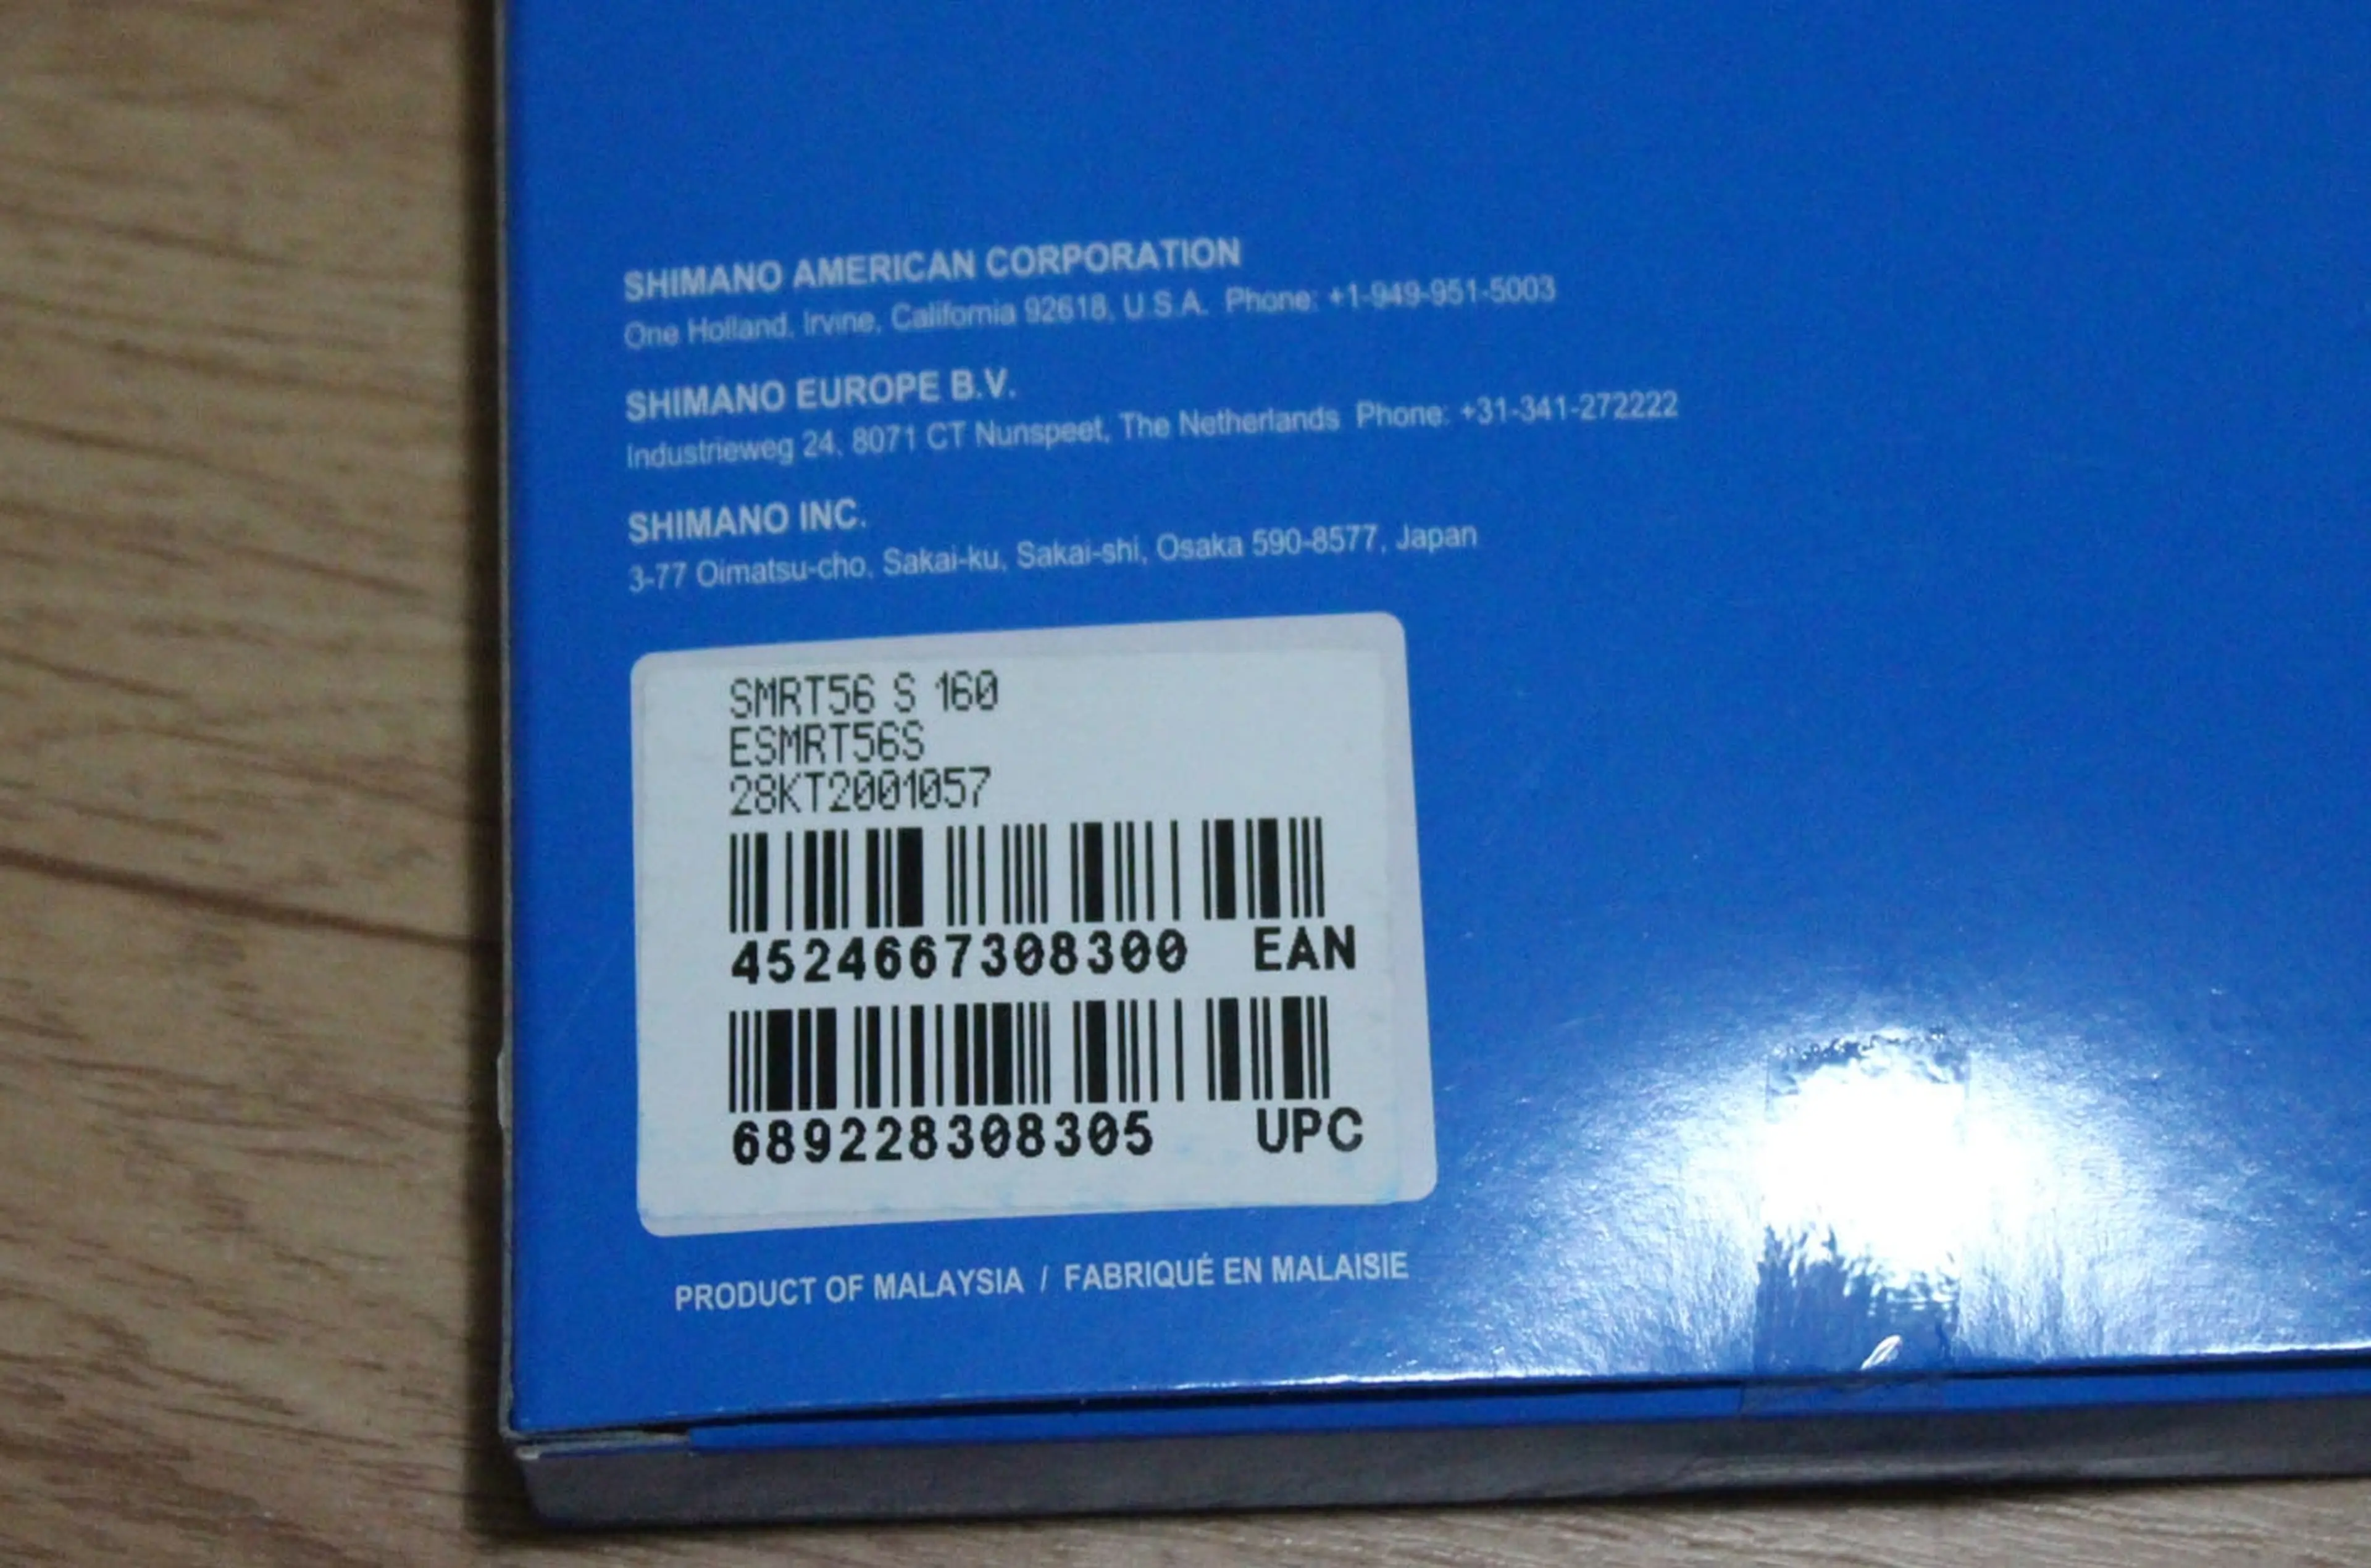 2. Shimano SM-RT56S 160mm disc